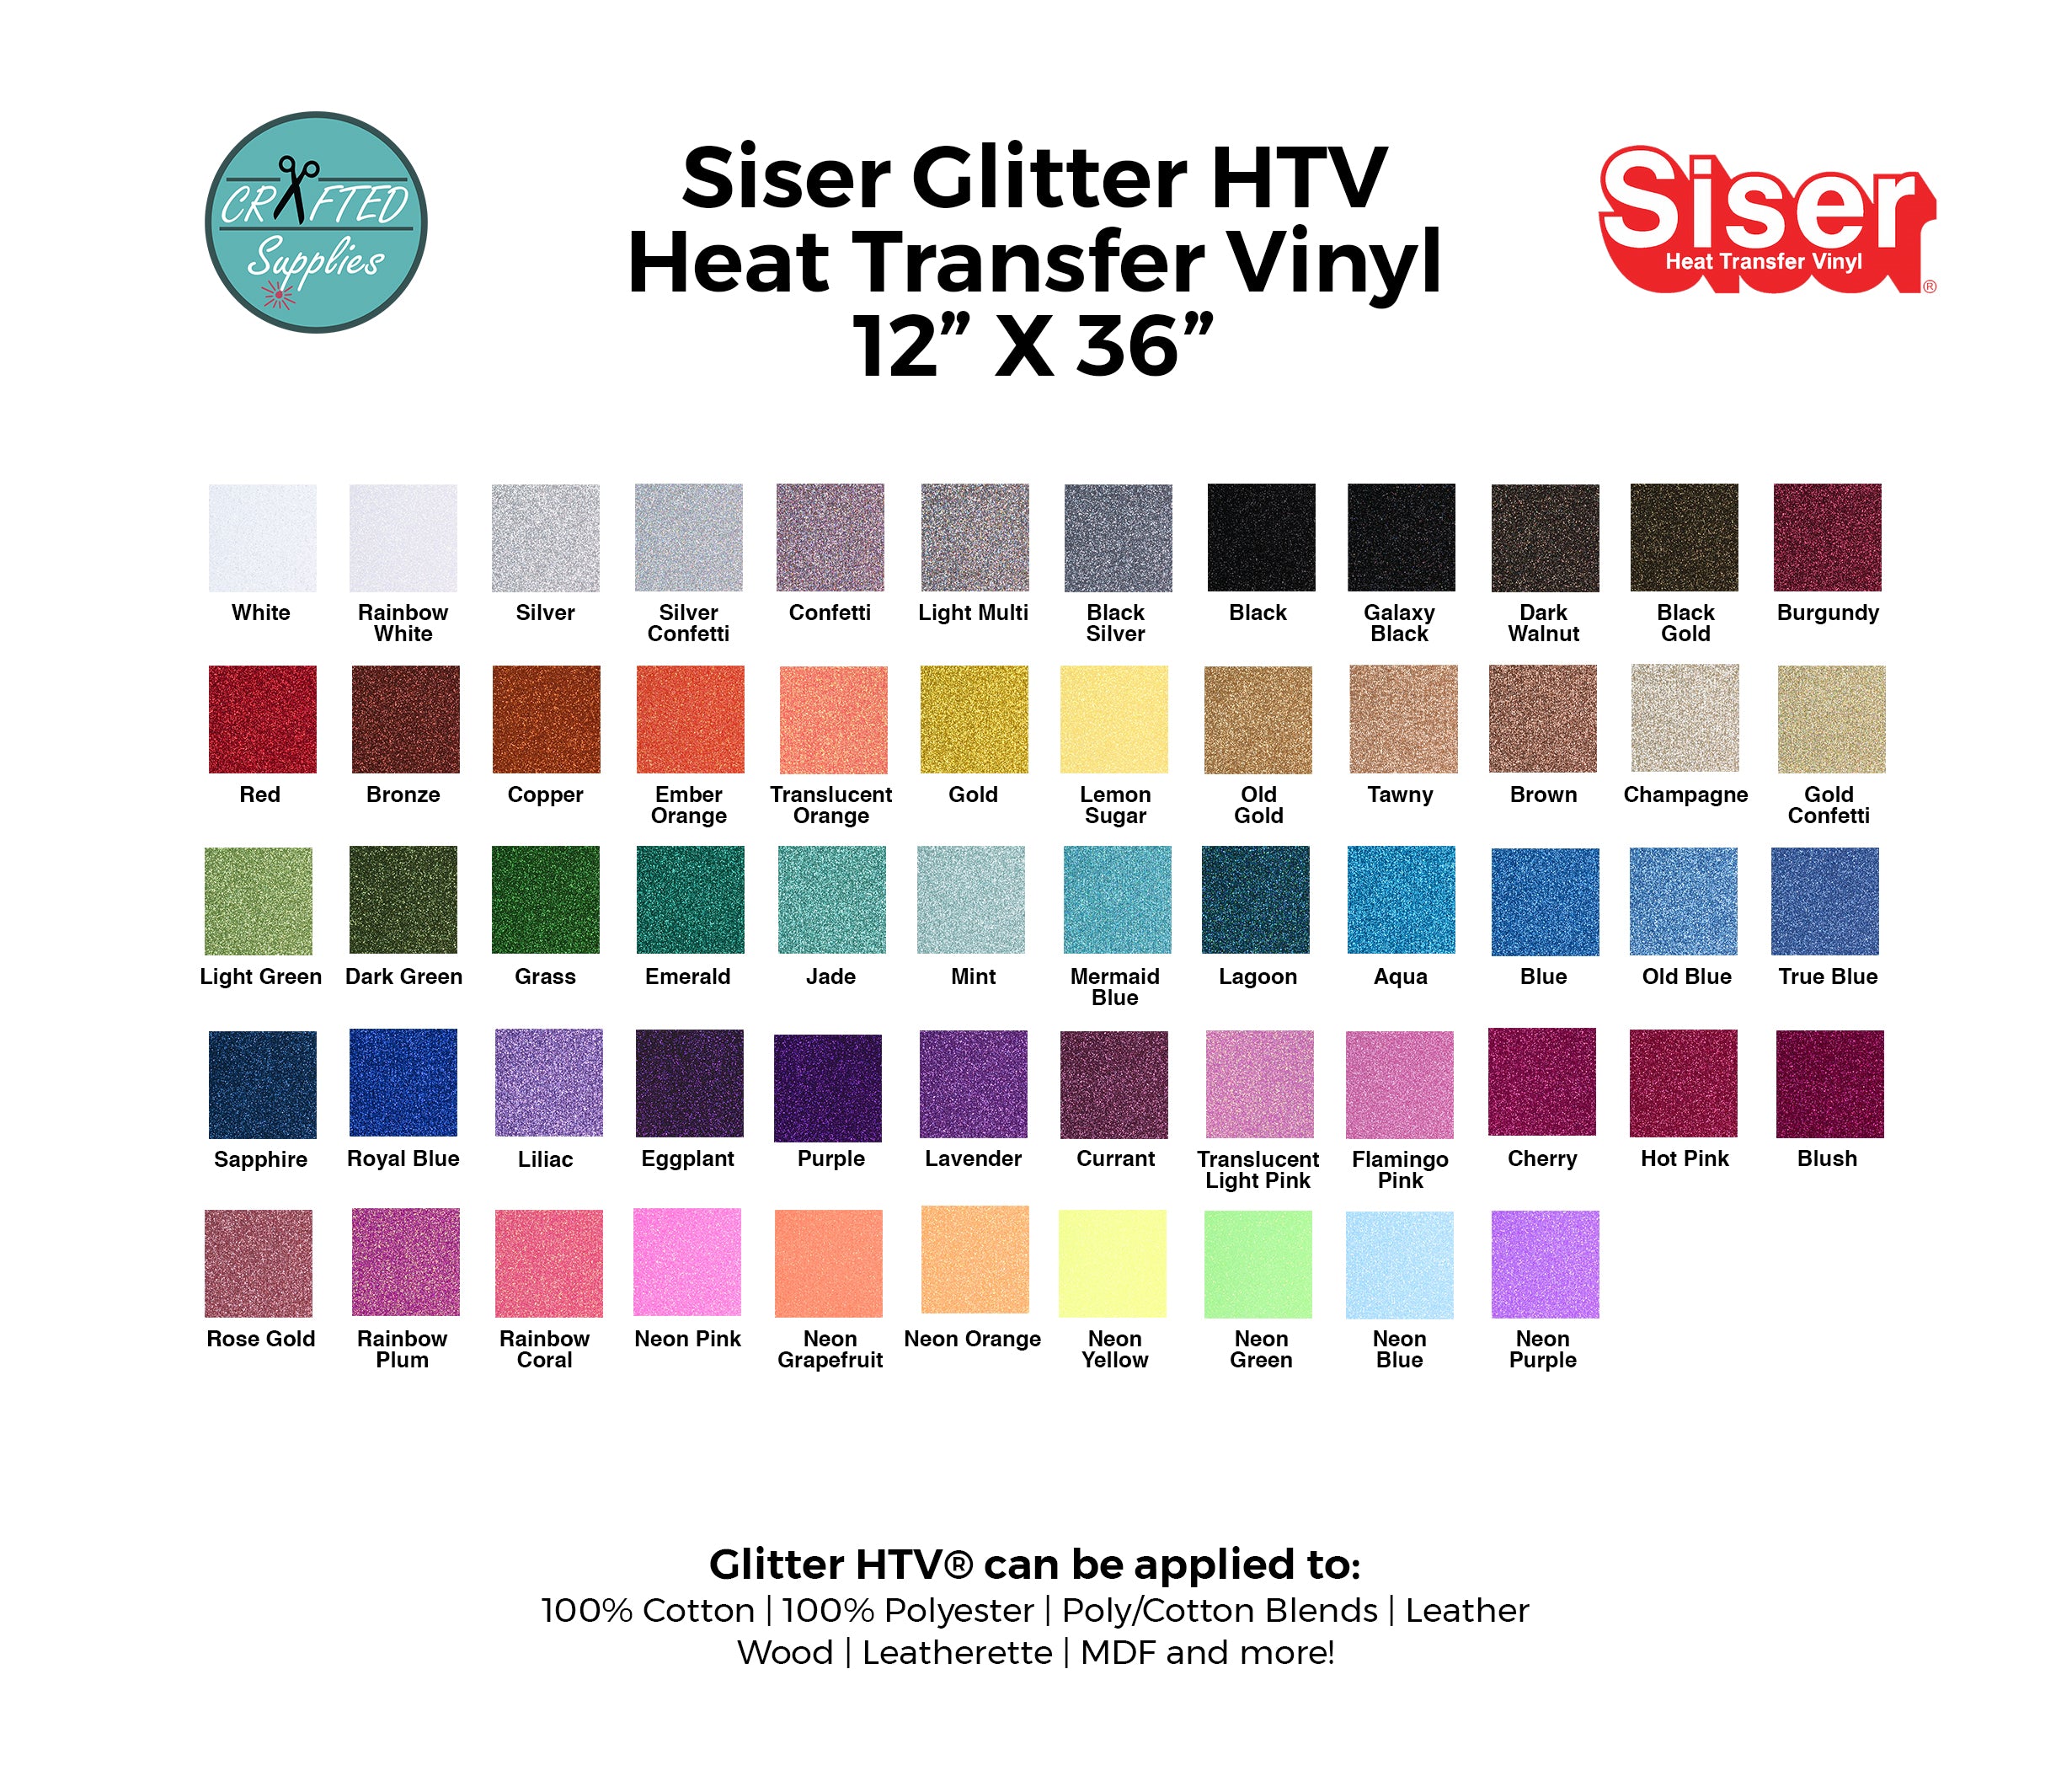 Siser Glitter Heat Transfer Vinyl: Neon Purple, 11.8 x 36 inches